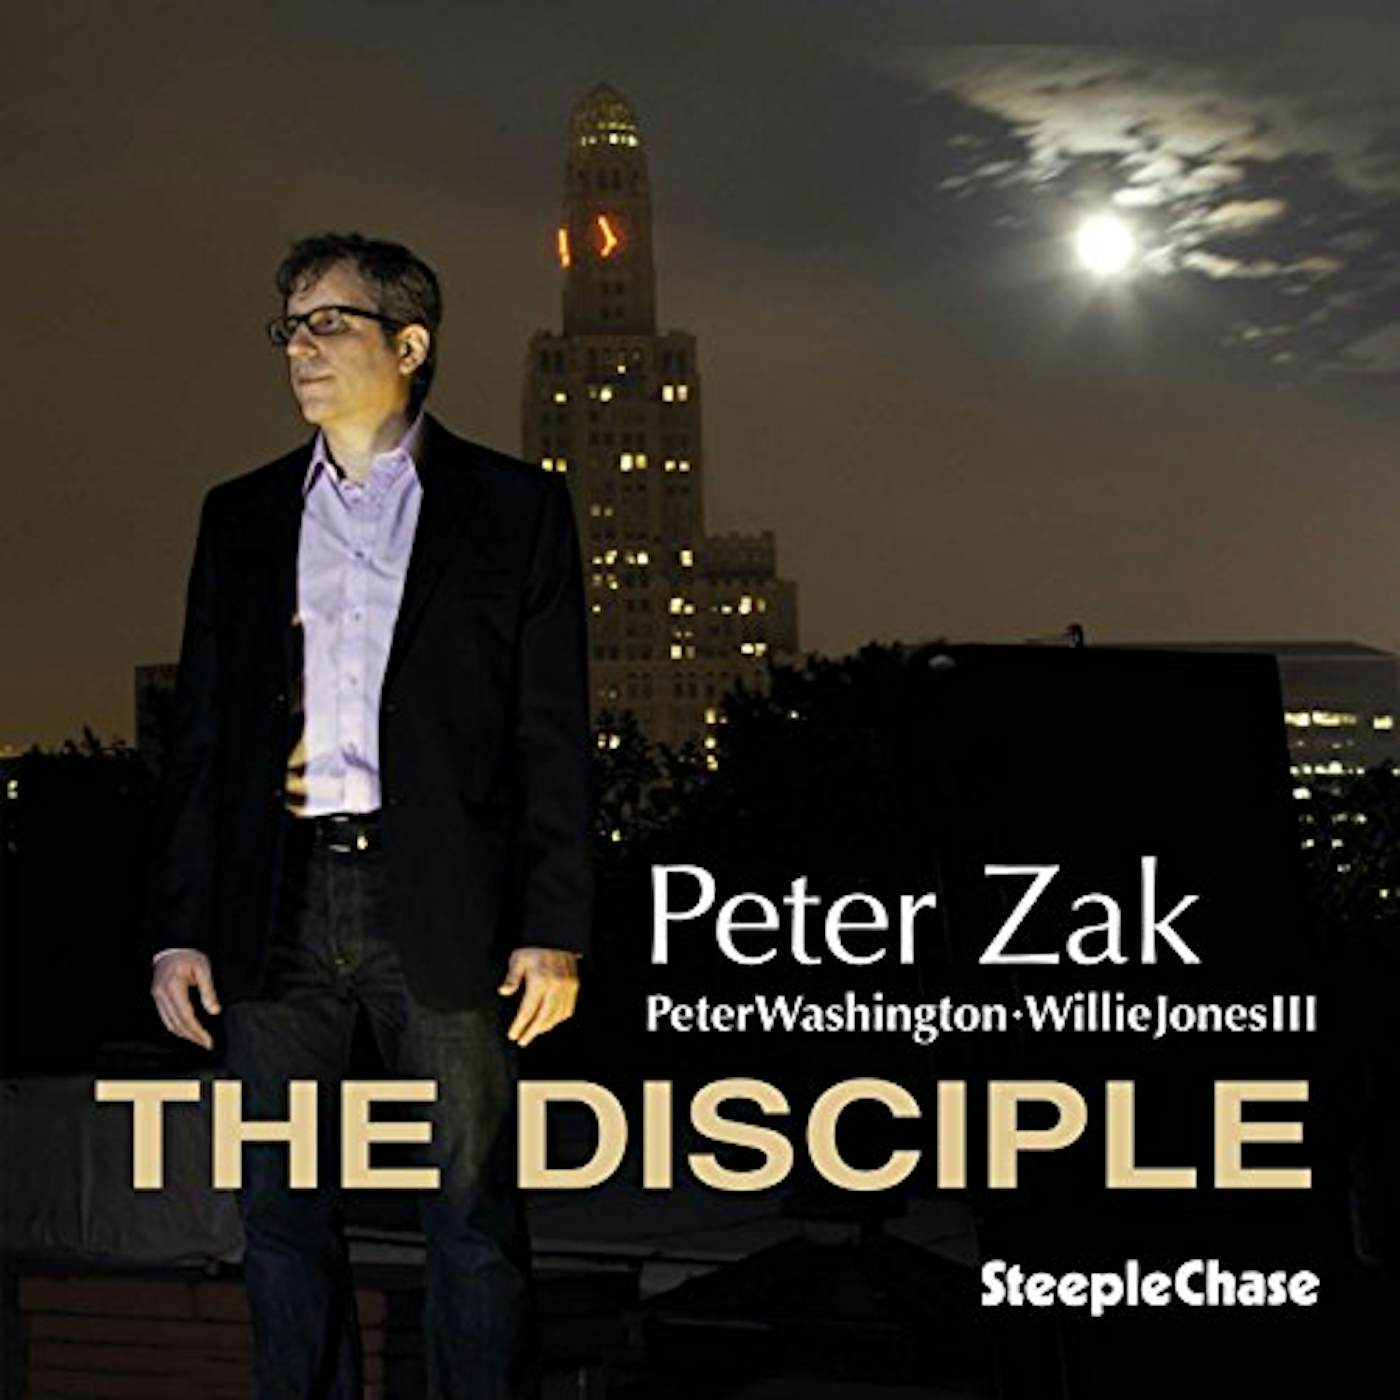 Peter Zak DISCIPLE CD